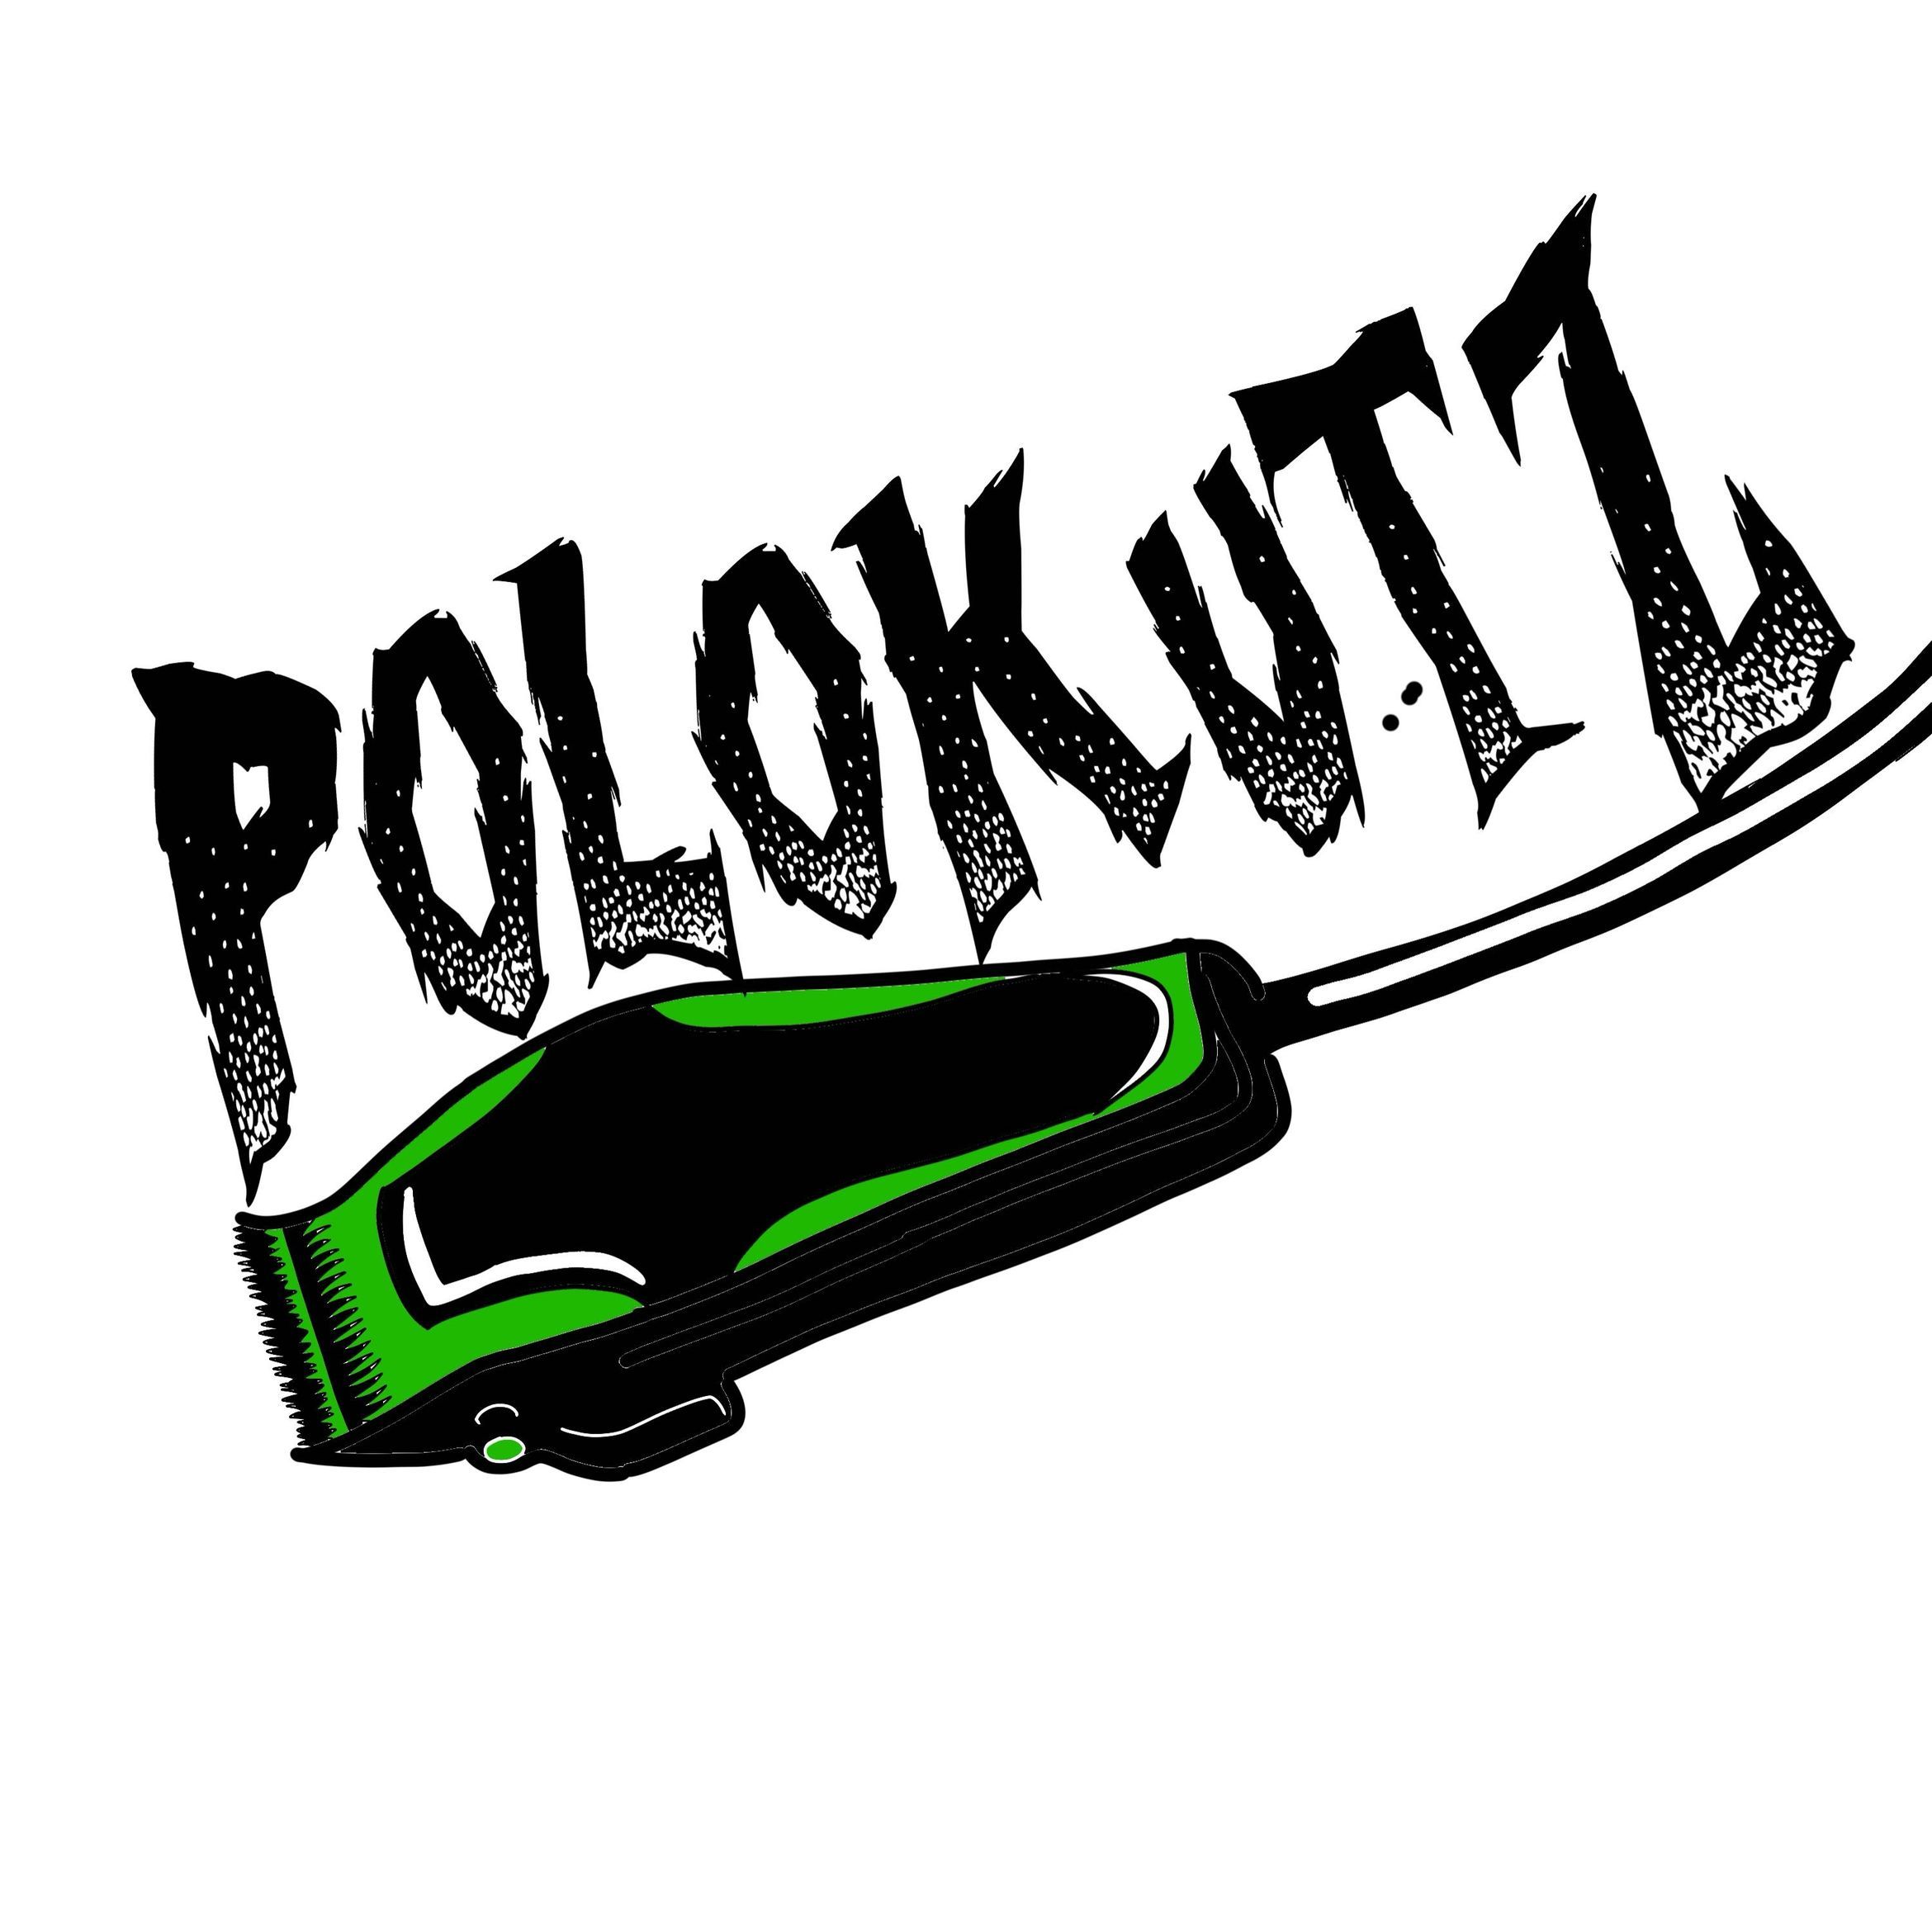 Polokutzz, 999 rock island pl, Pensacola, 32505